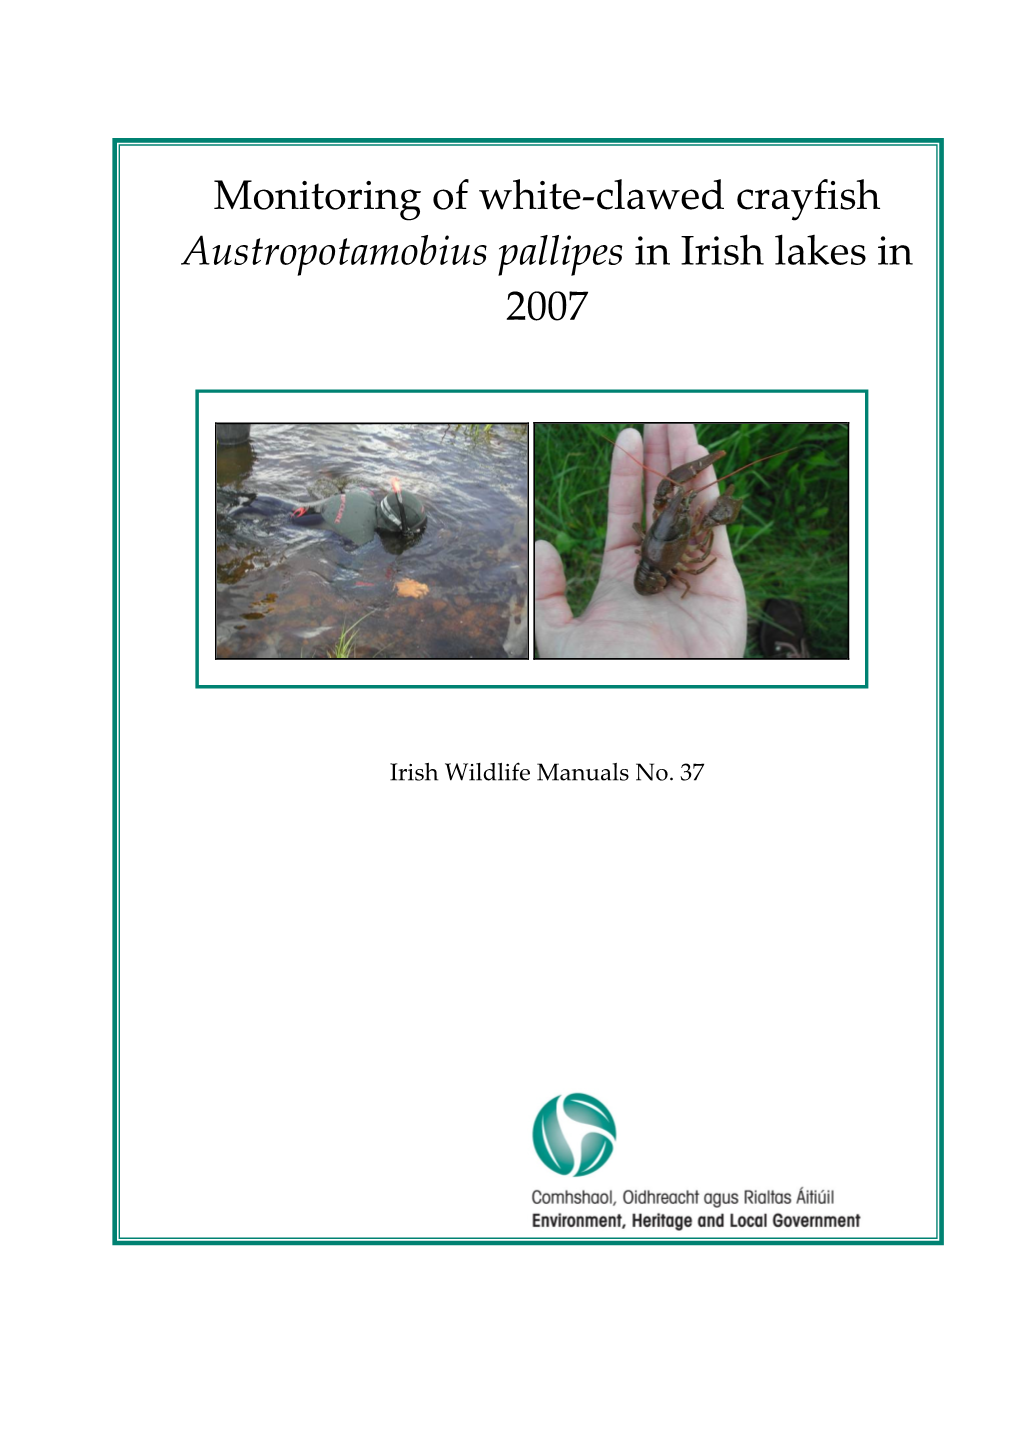 Monitoring of White-Clawed Crayfish Austropotamobius Pallipes in Irish Lakes in 2007